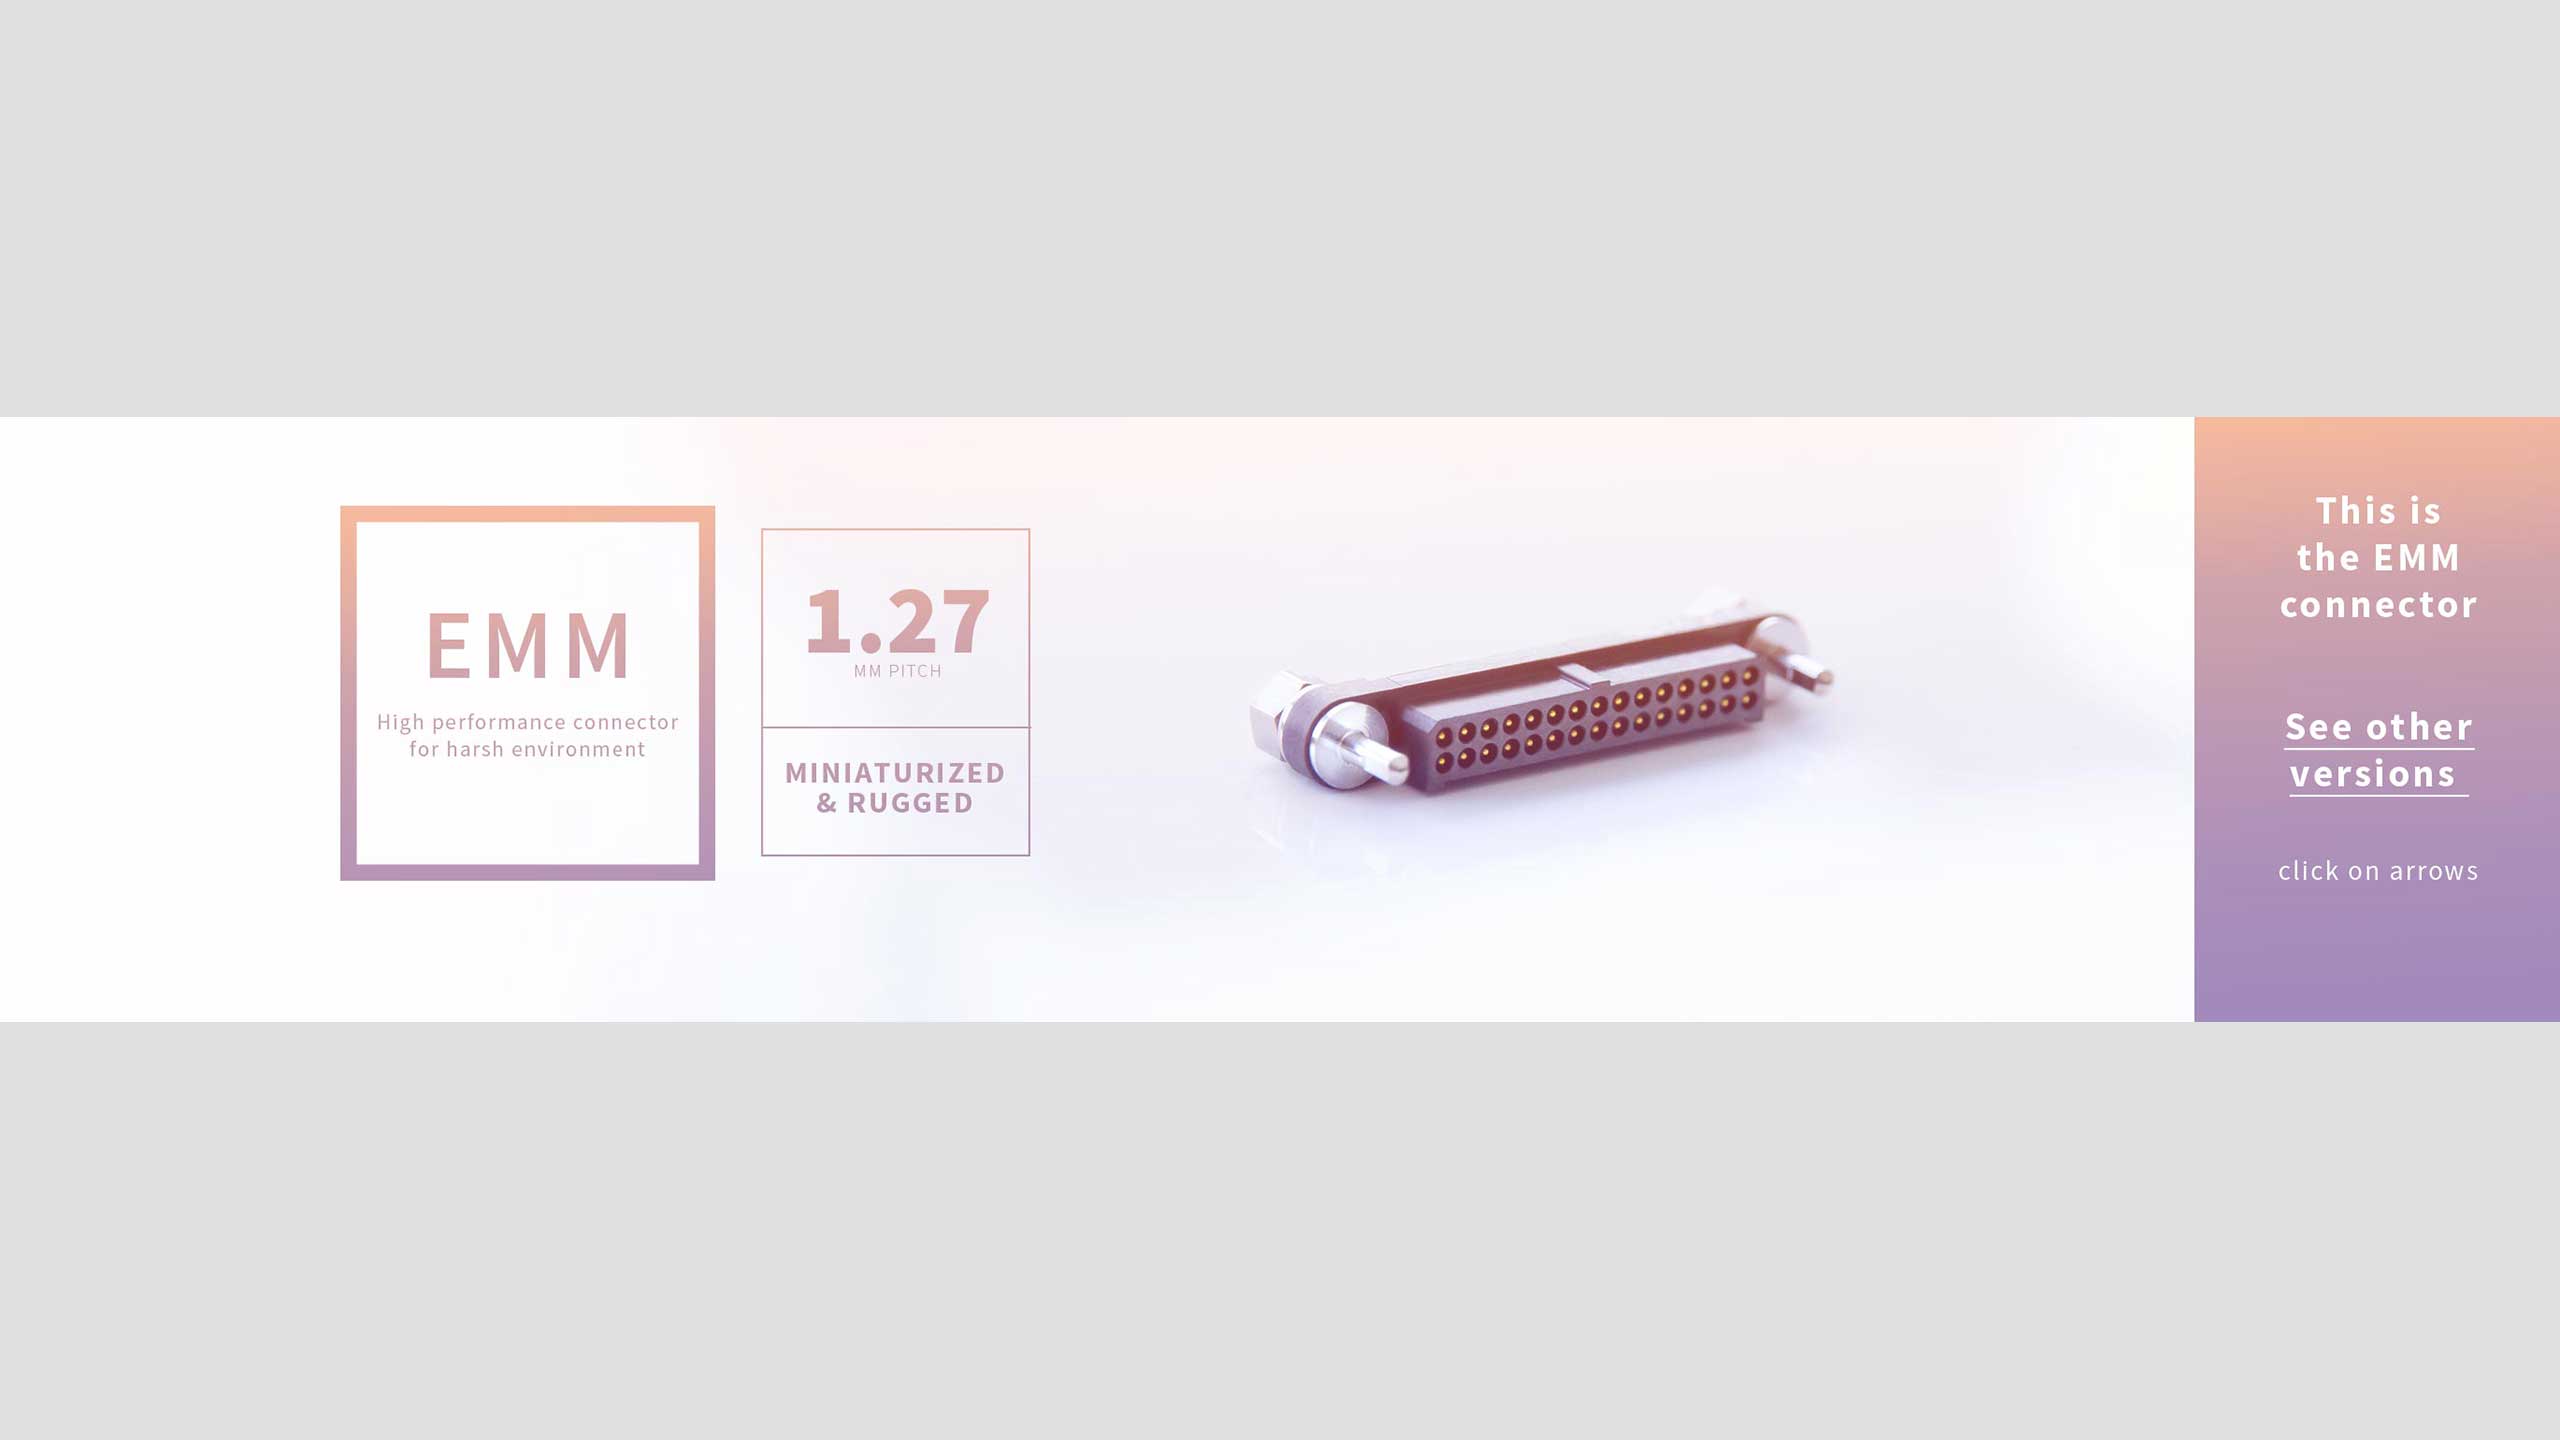 Nicomatic lanserar 1.27 mm pitch EMM series kontaktdon